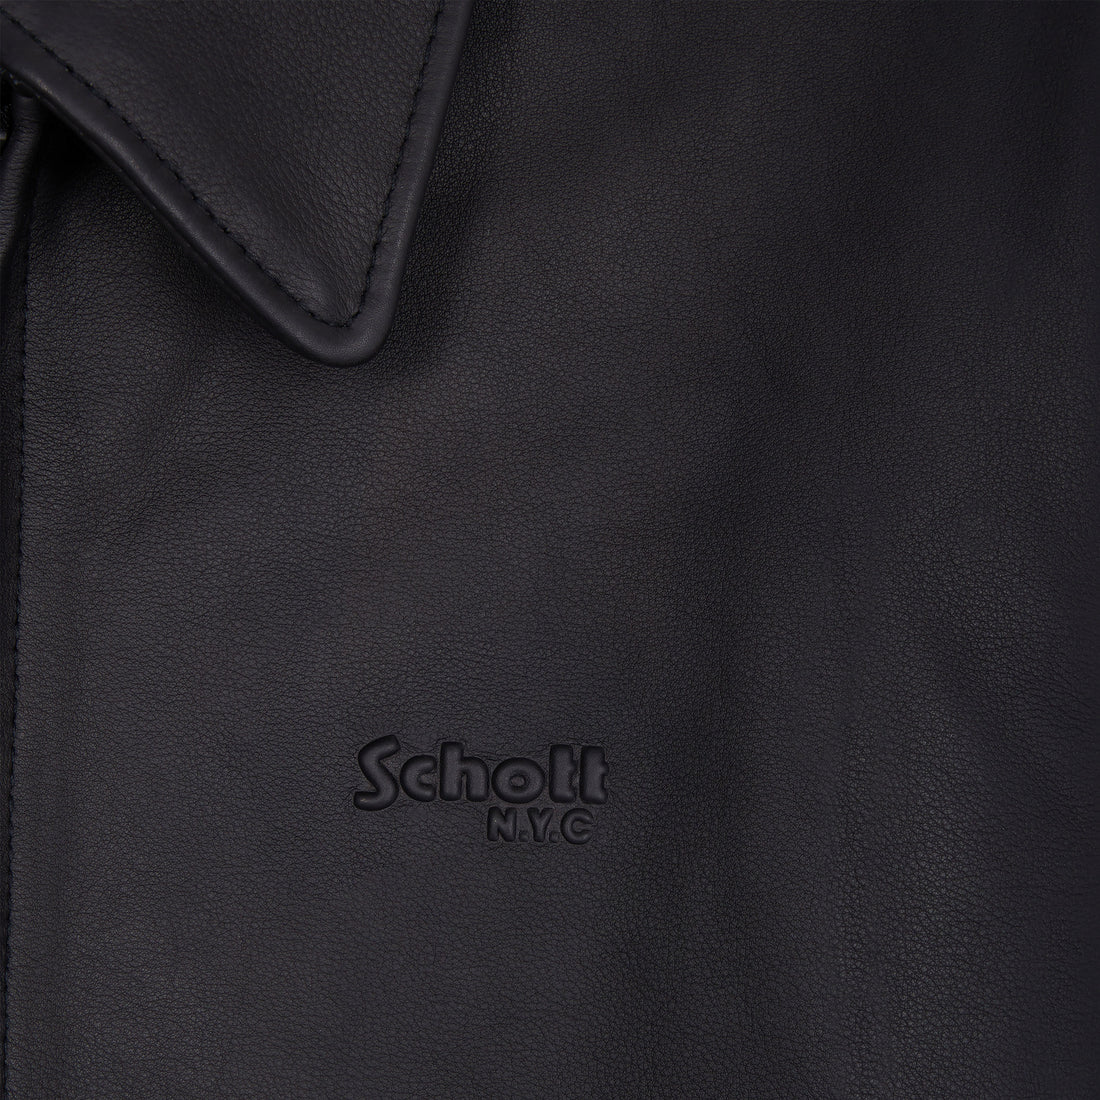 Walk in Paris x Schott NYC - The black leather jacket